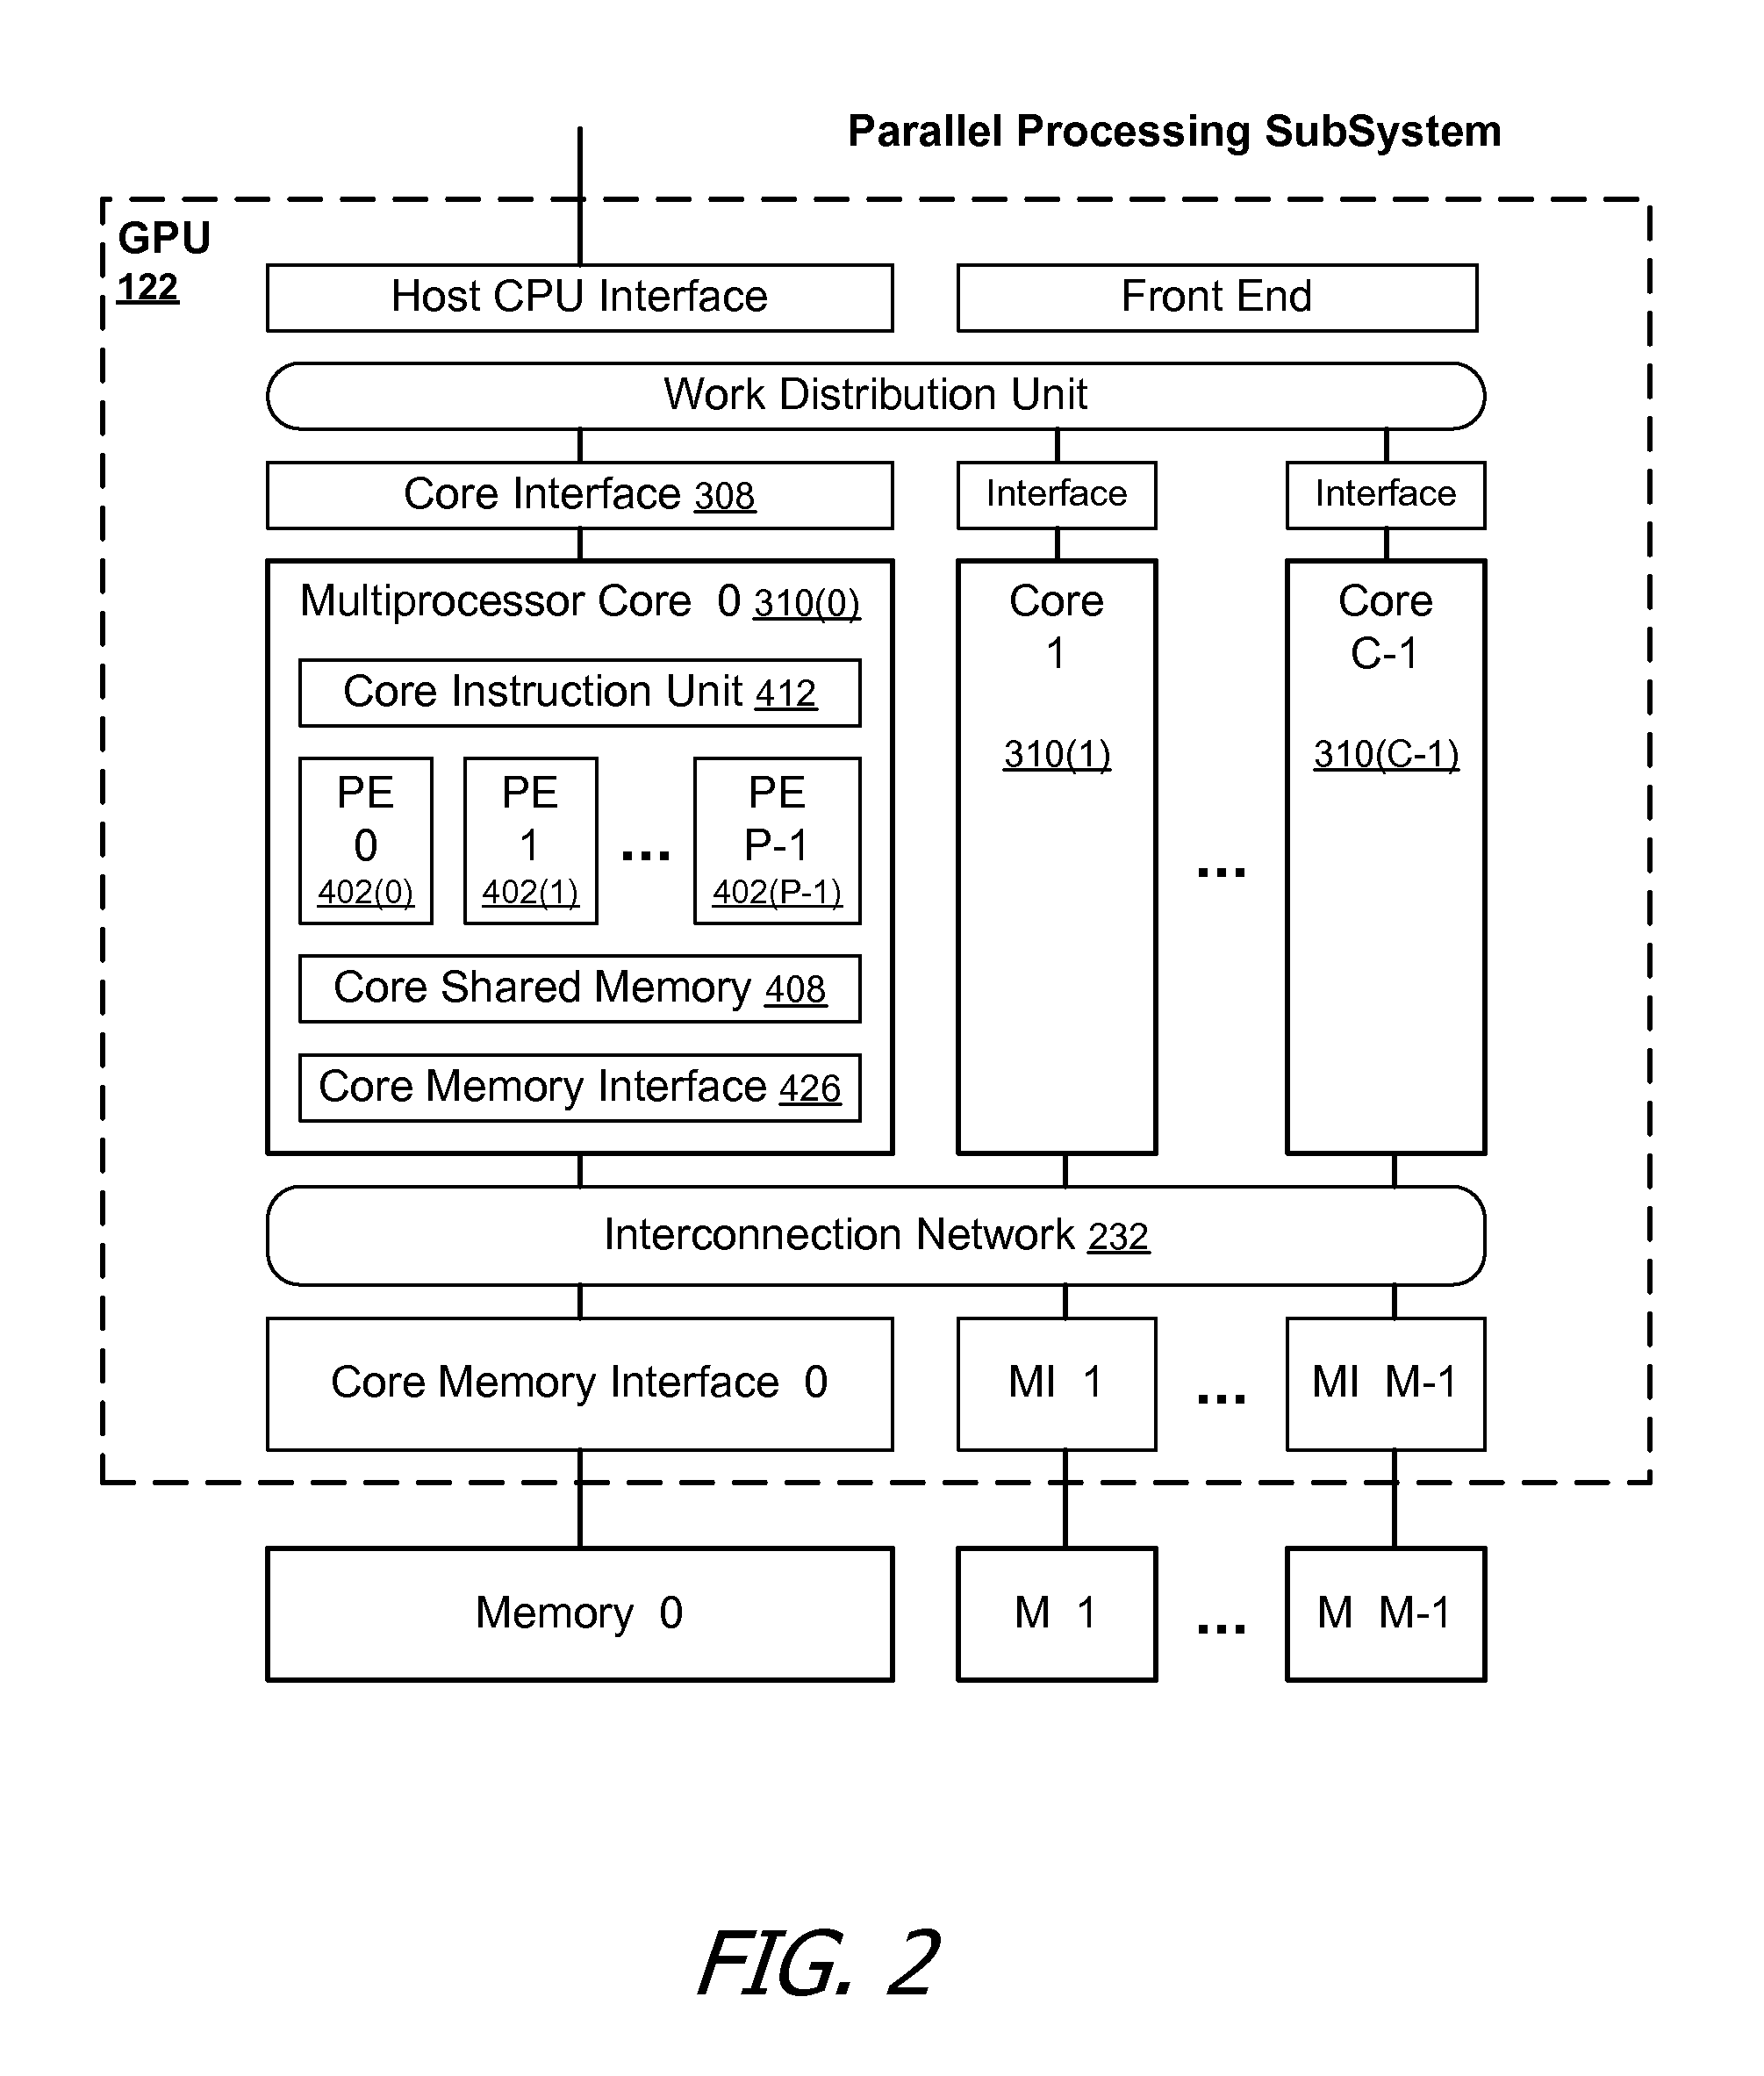 Atomic memory operators in a parallel processor